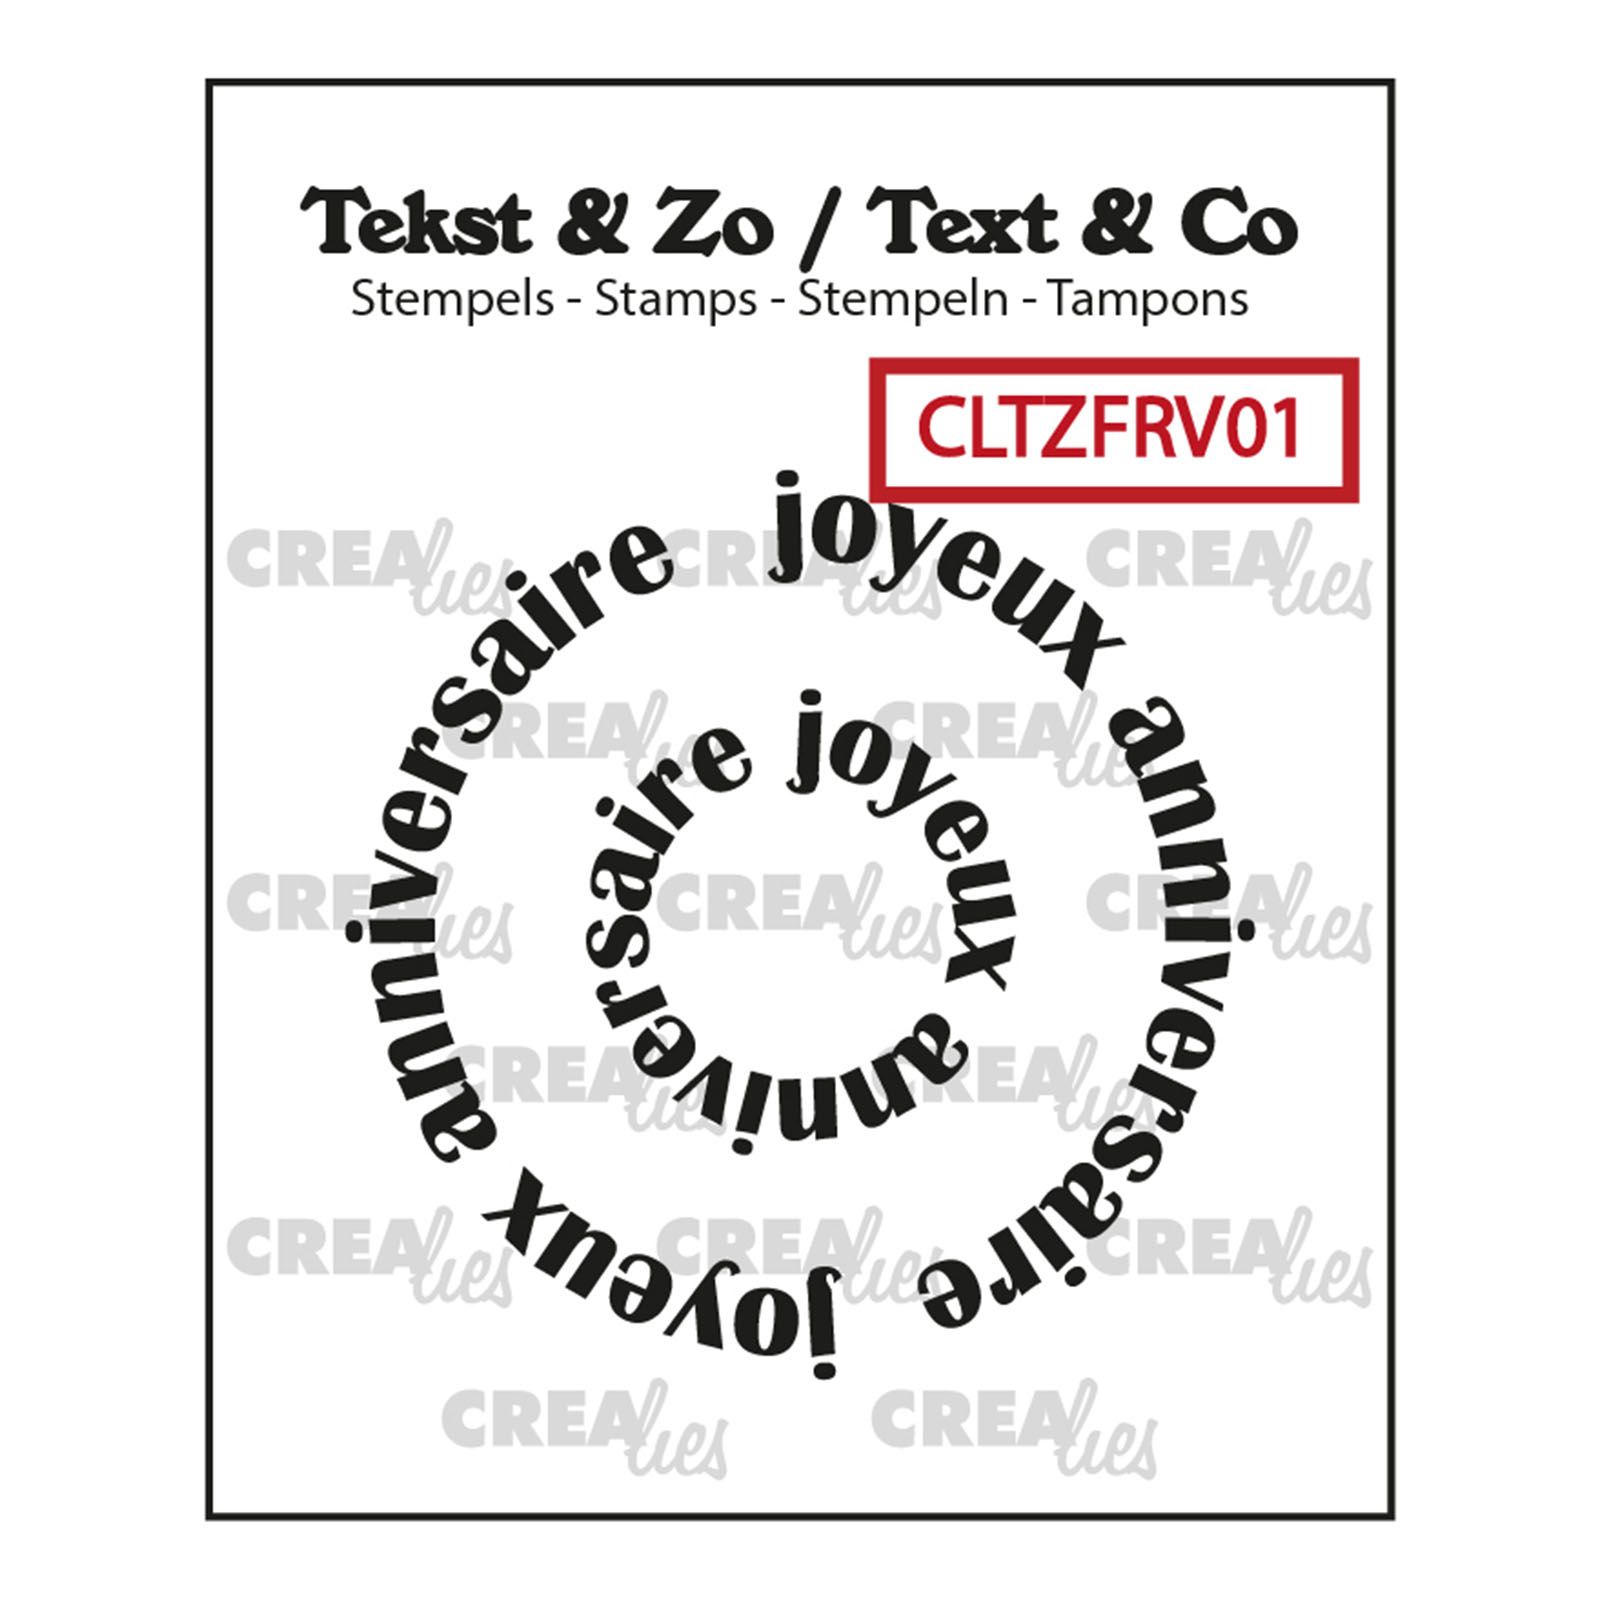 Crealies •  Text & So stamps French text "Joyeux anniversaire"